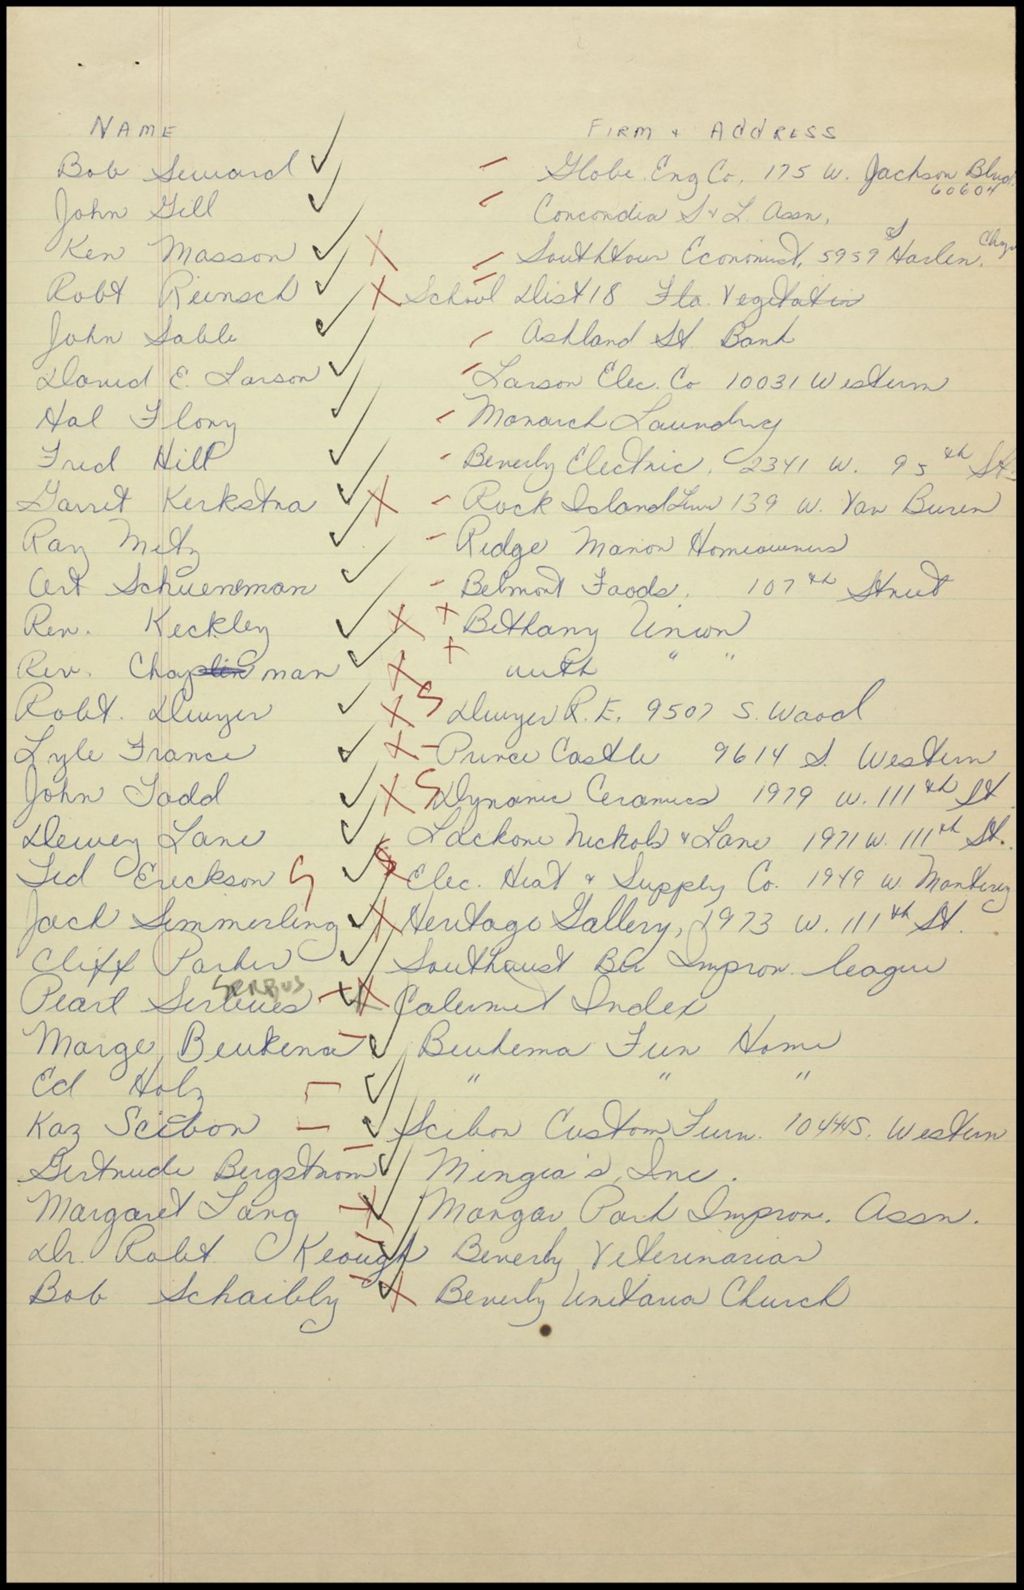 Miniature of Luncheon - list of attendants (Folder 128)